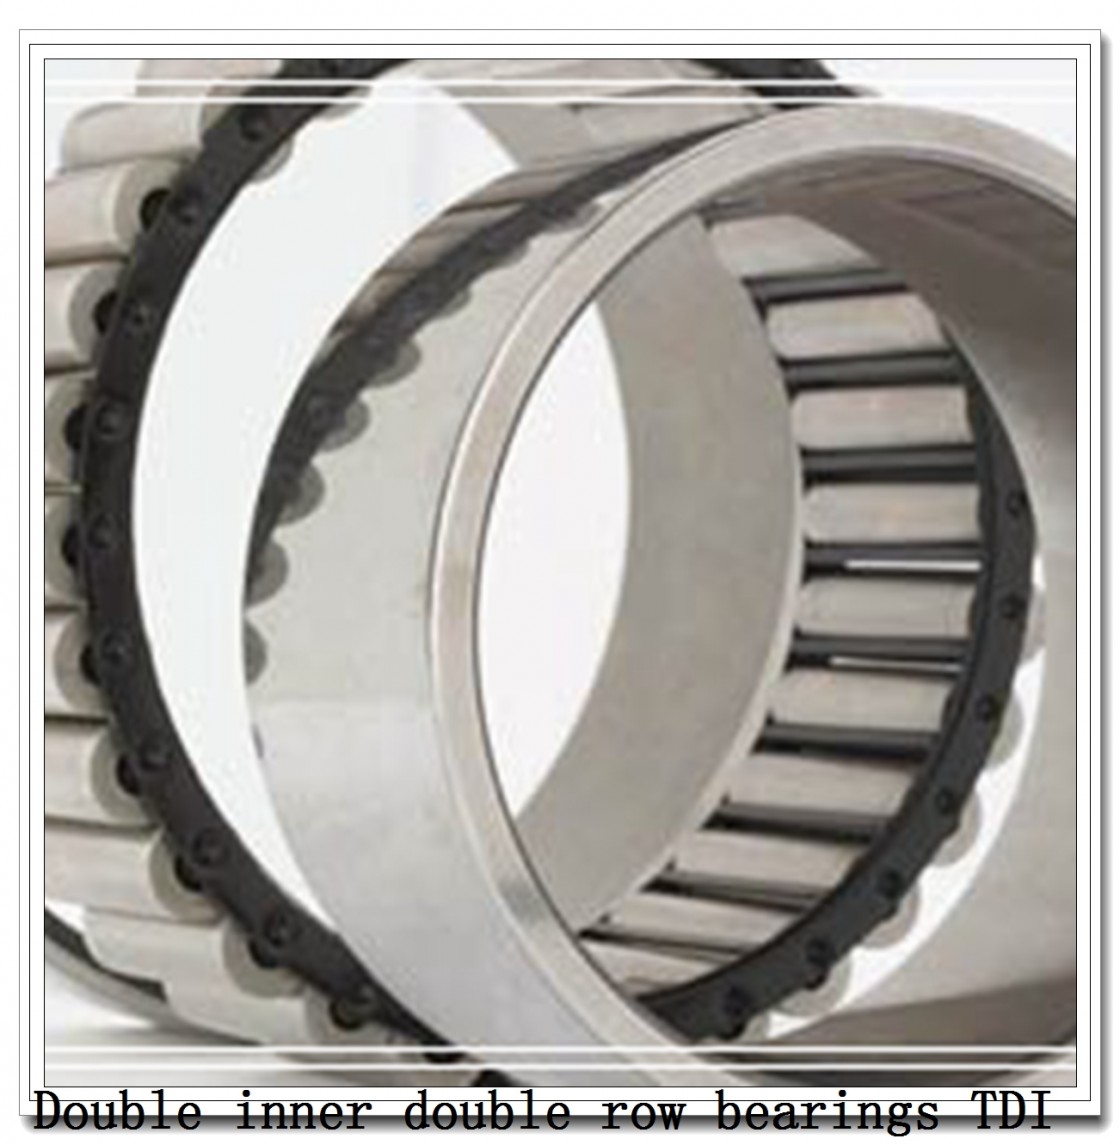 140TDO225-3 Double inner double row bearings TDI